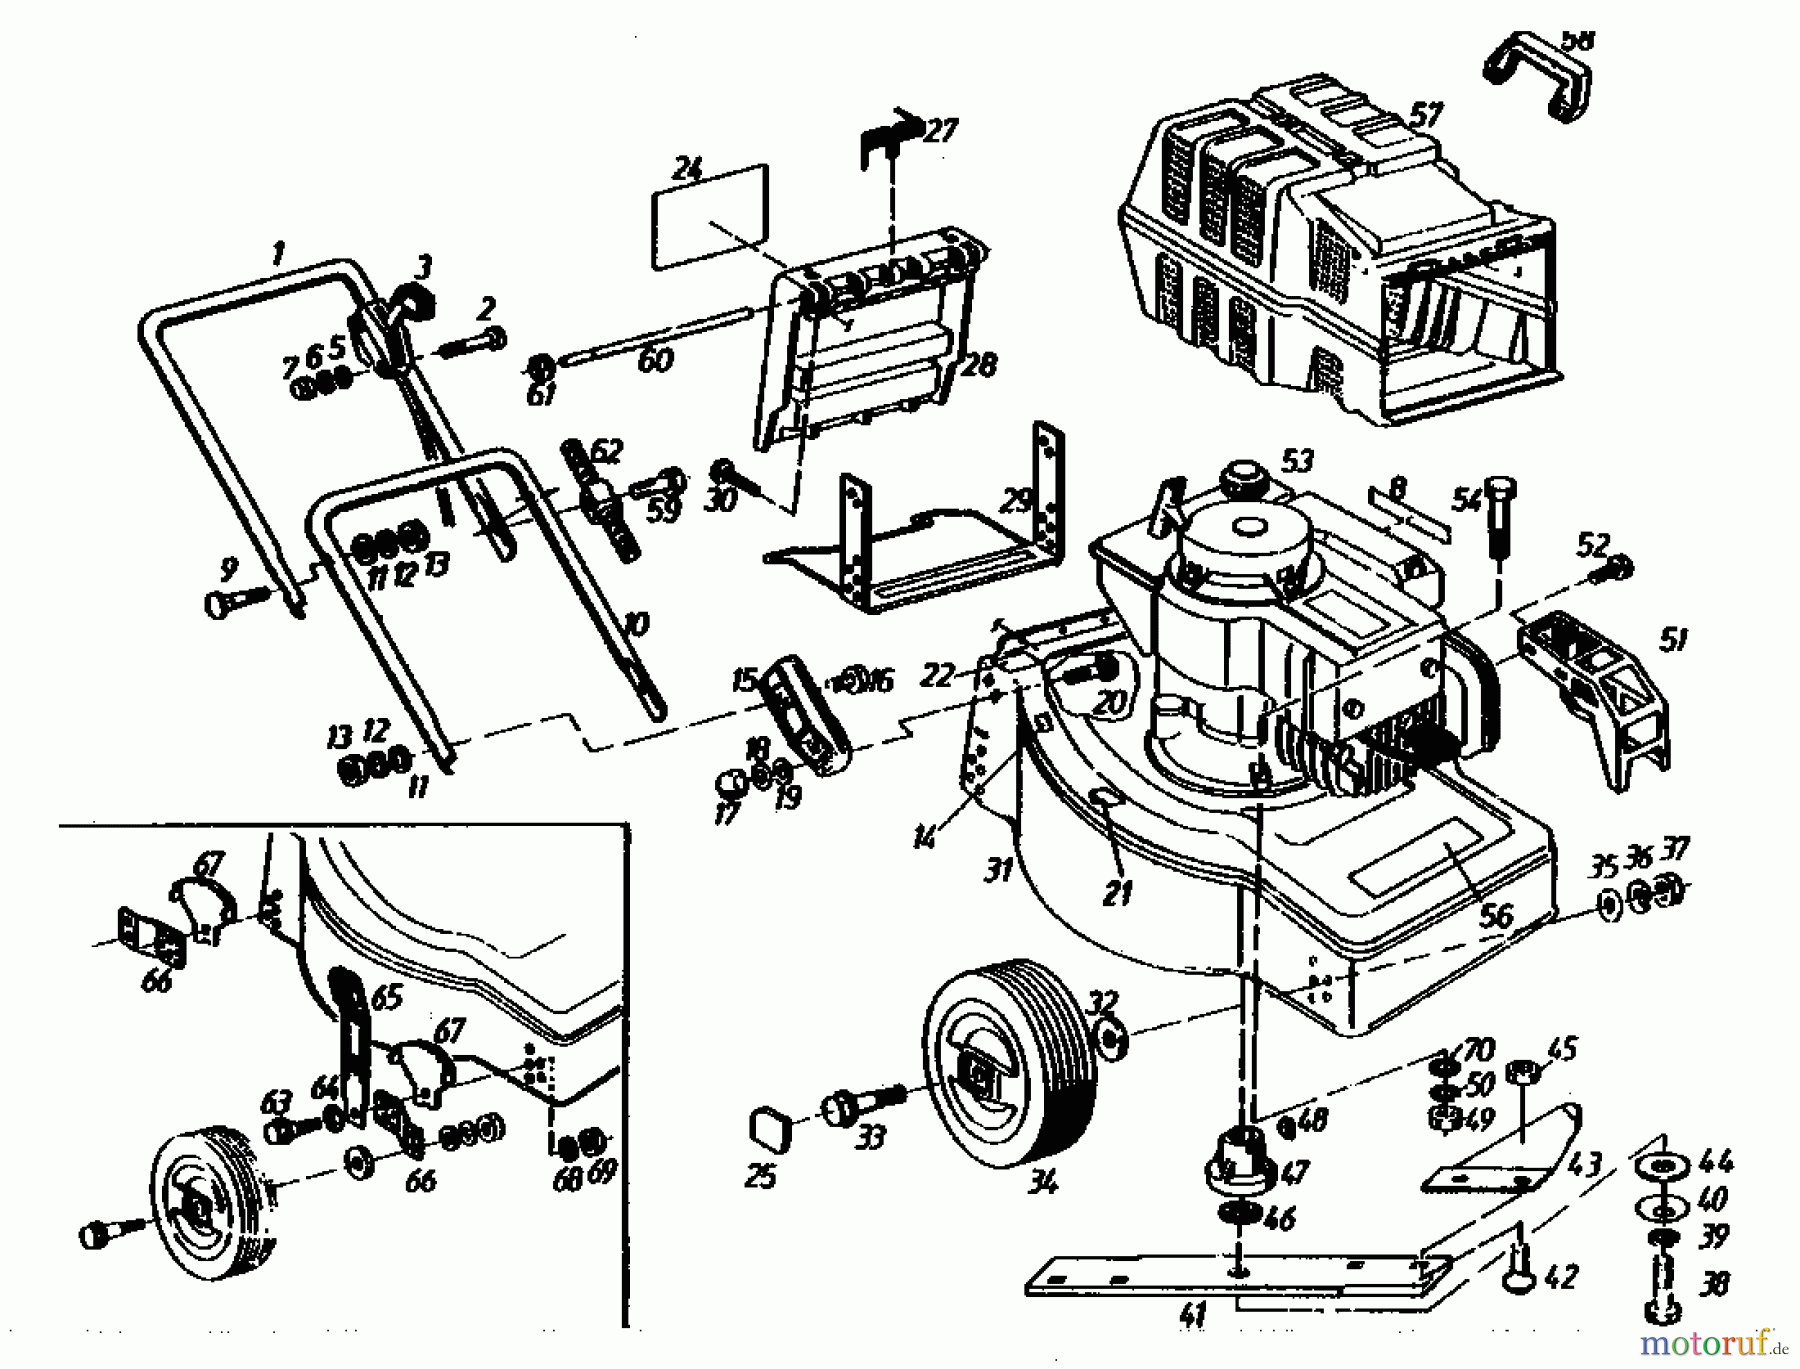  Golf Petrol mower TURBO 46 02880.09  (1990) Basic machine